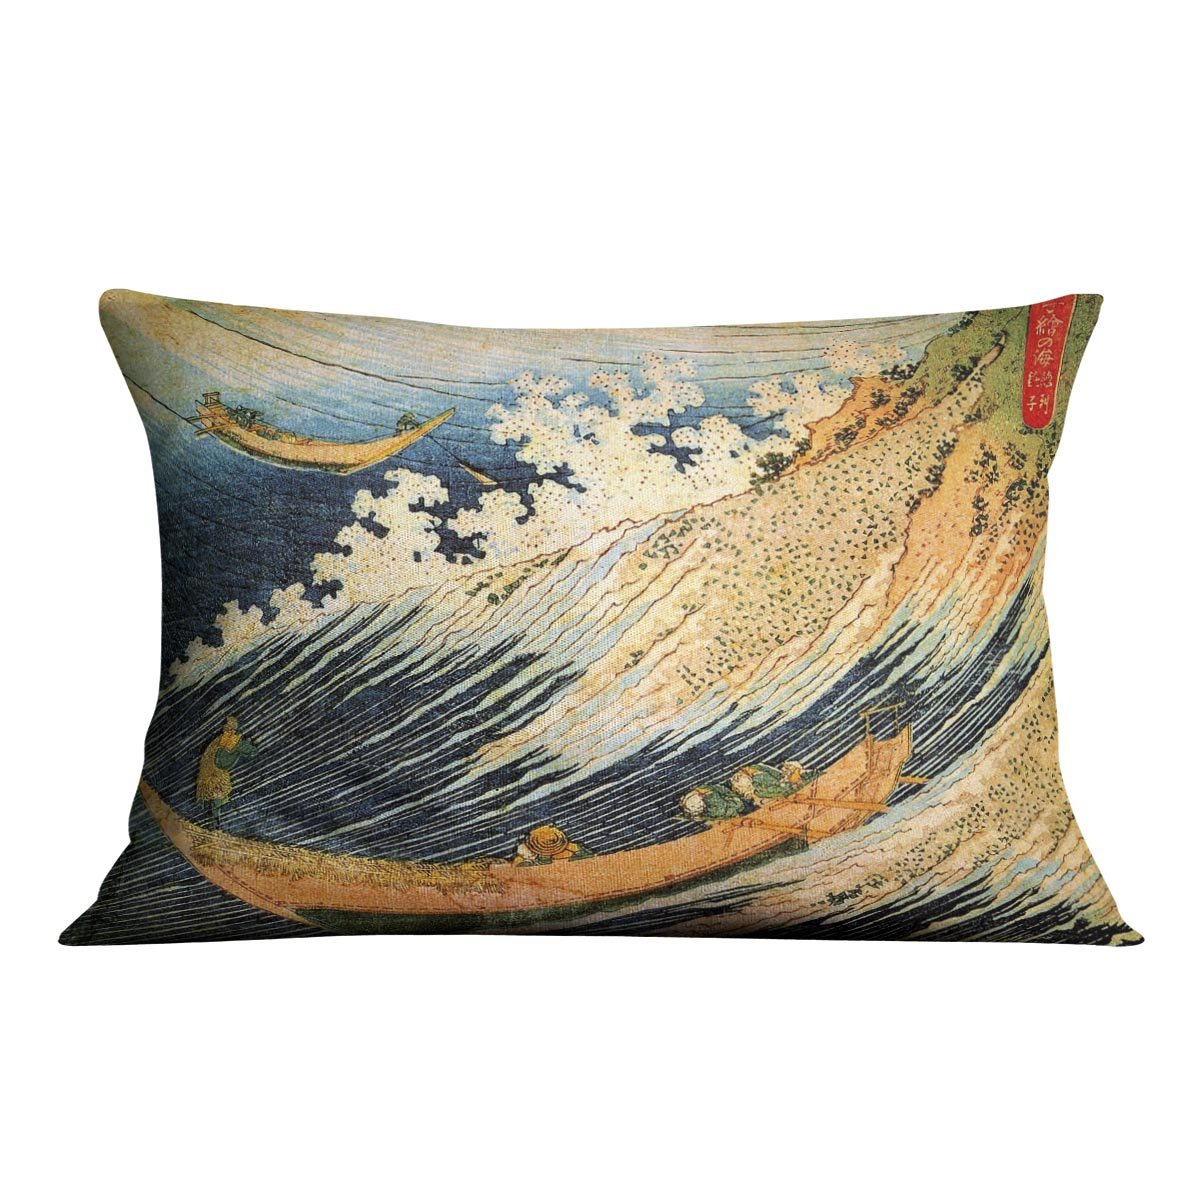 Ocean landscape 2 by Hokusai Throw Pillow